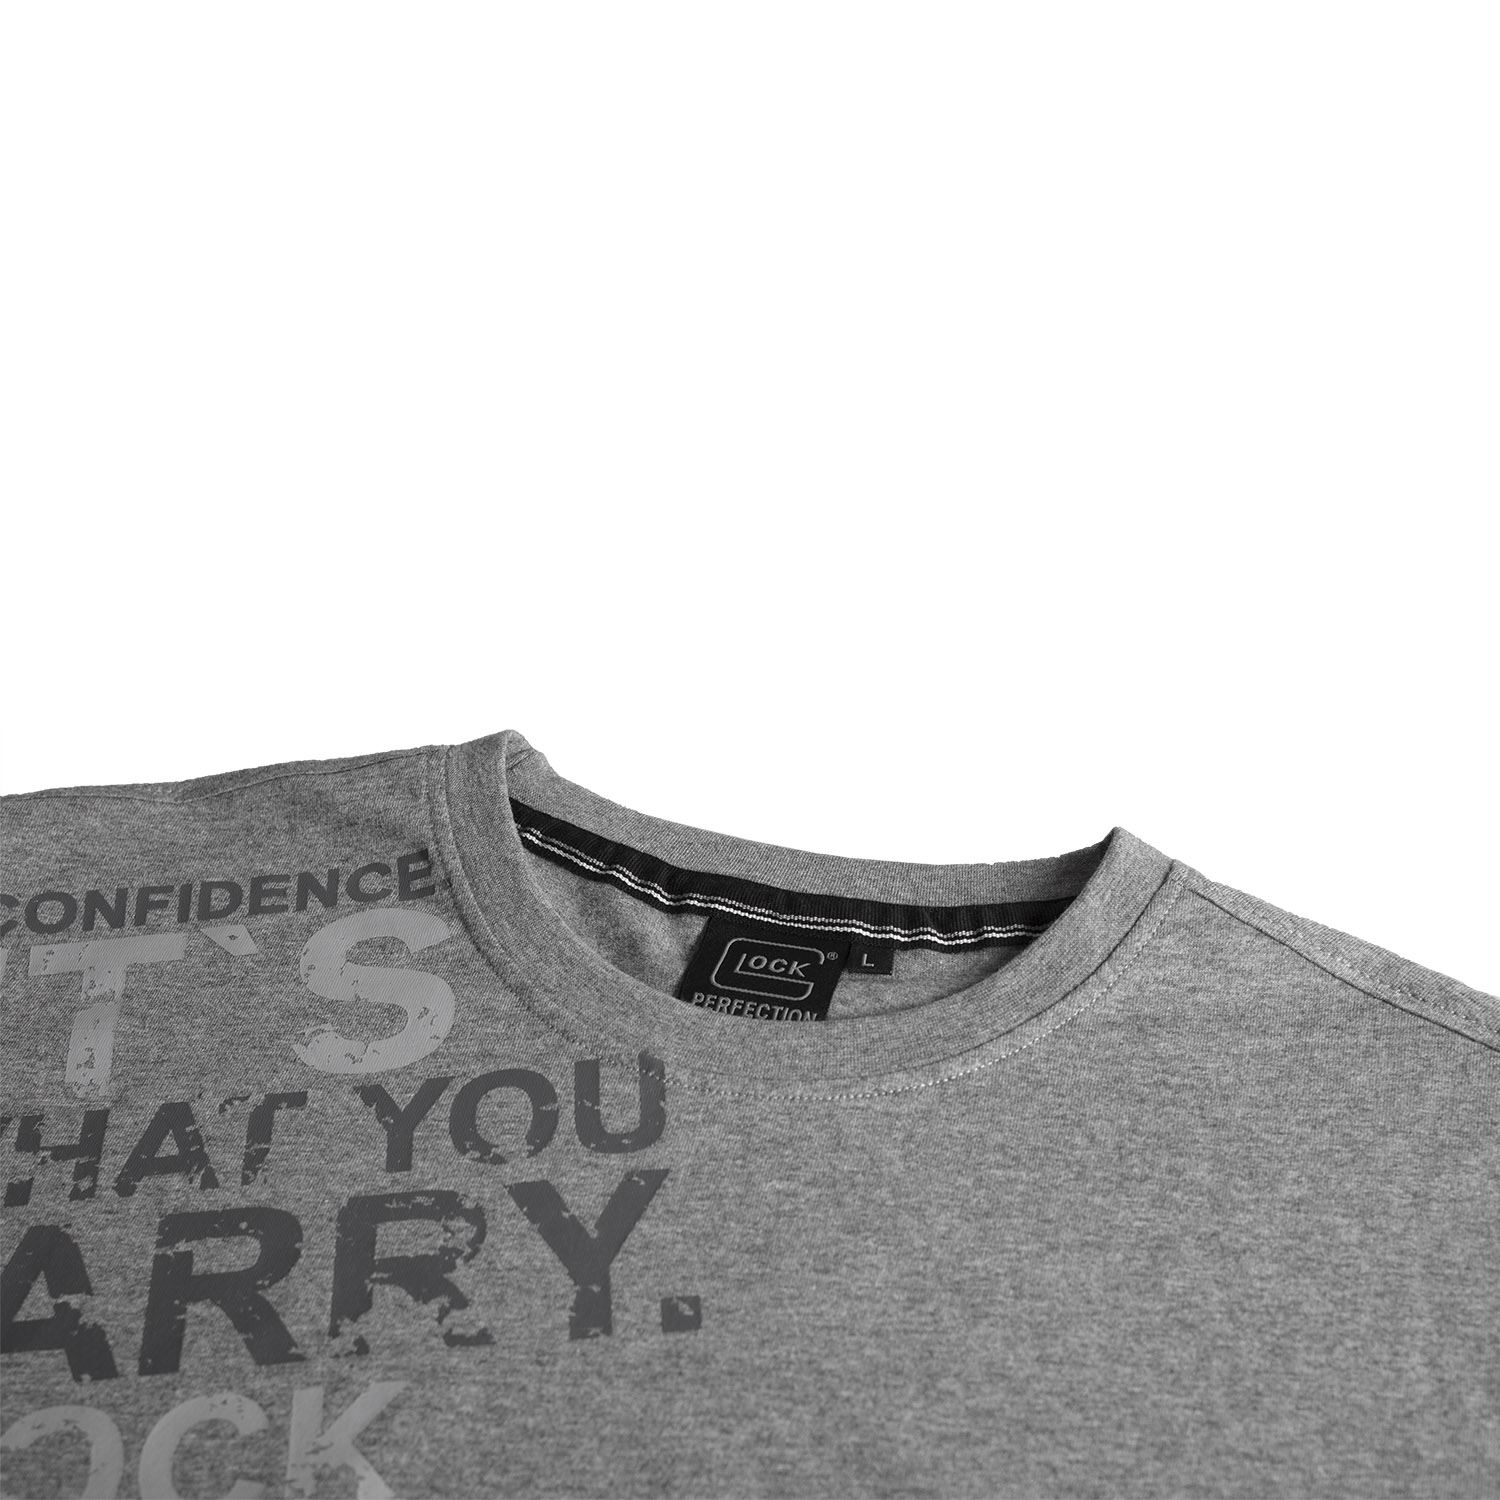 GLOCK Confidence T-Shirt